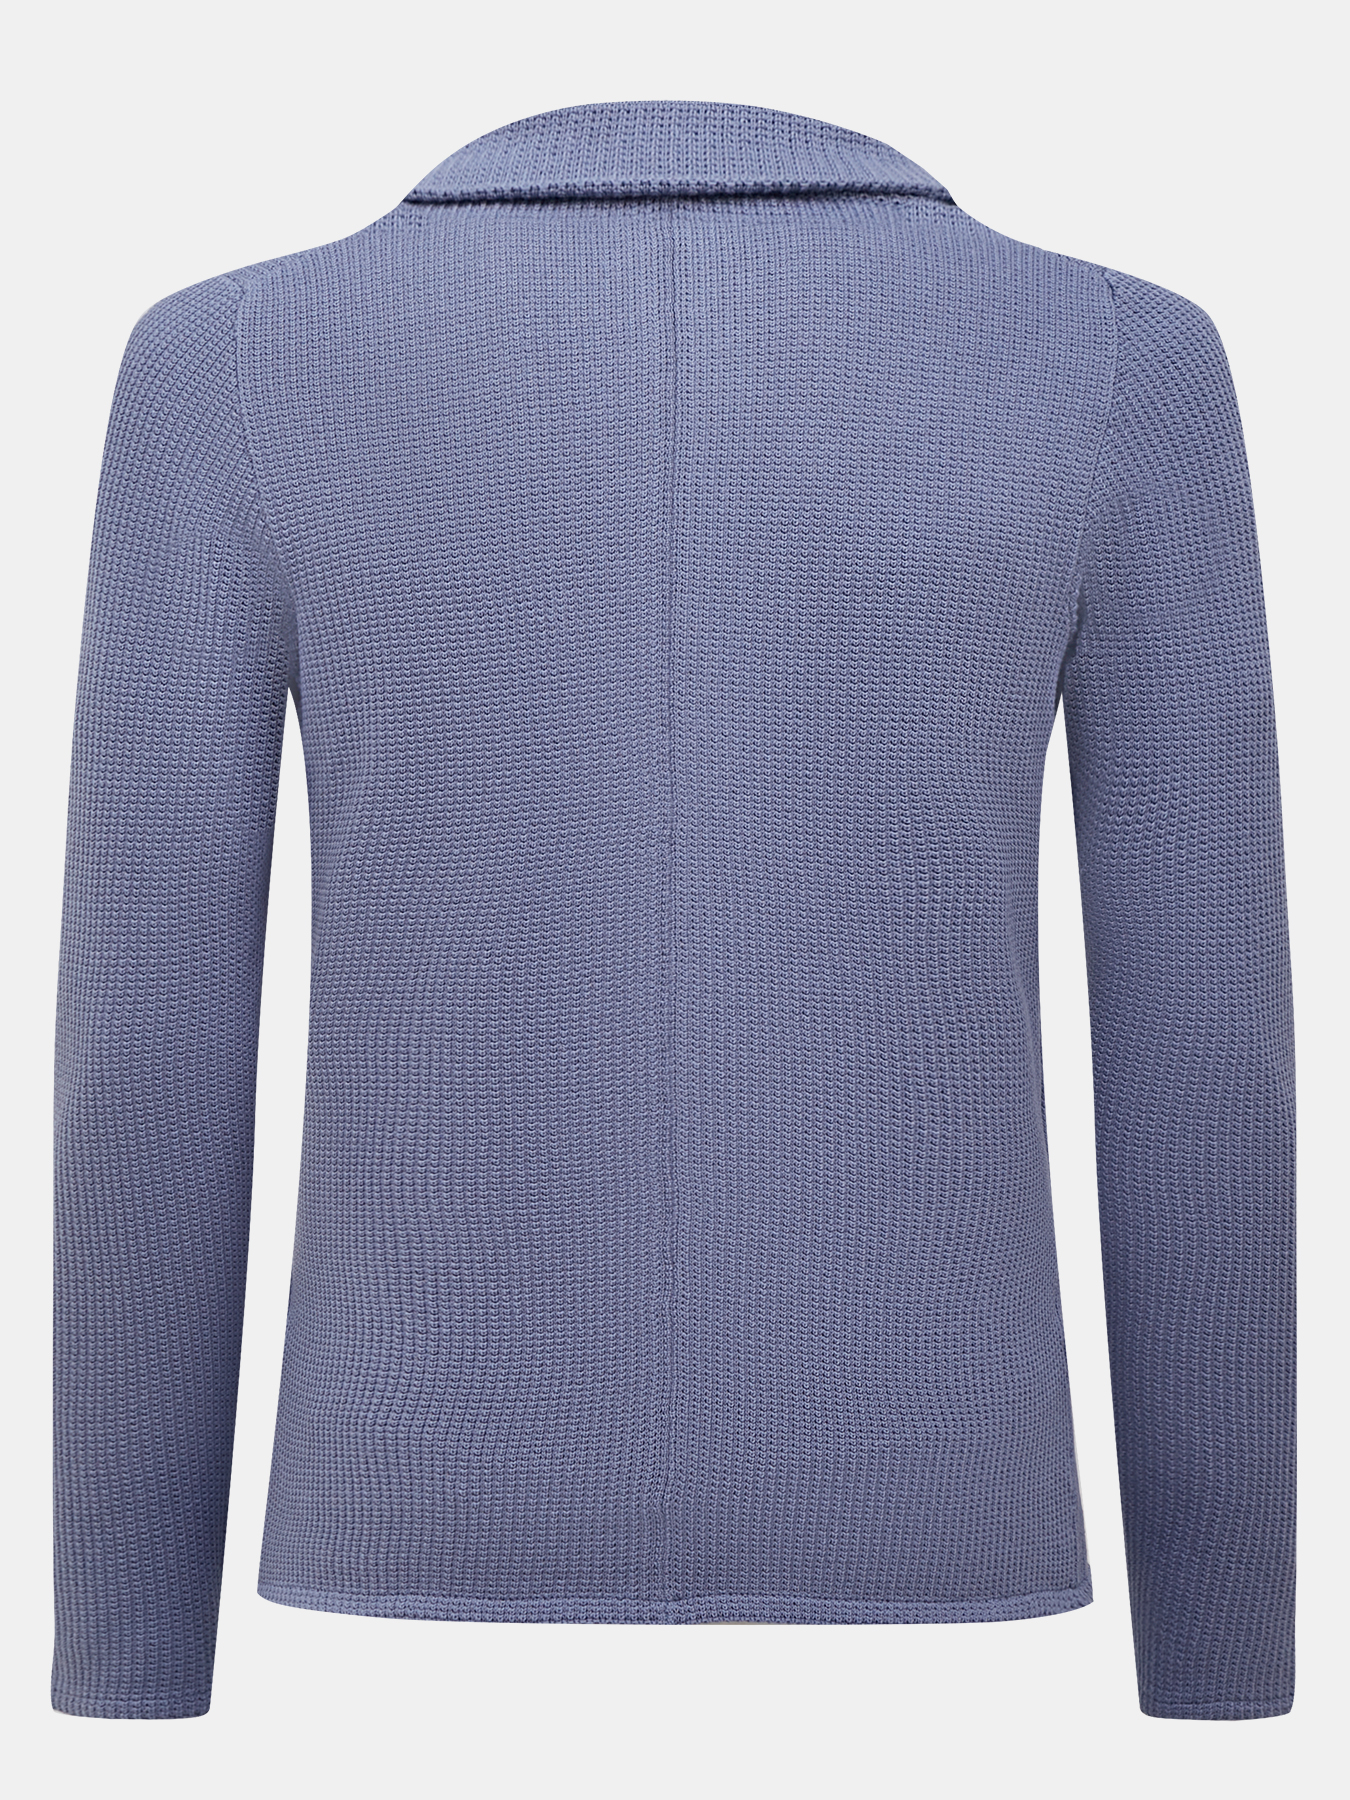 Пиджак Alessandro Manzoni 374208-025, цвет голубой, размер 48 - фото 2